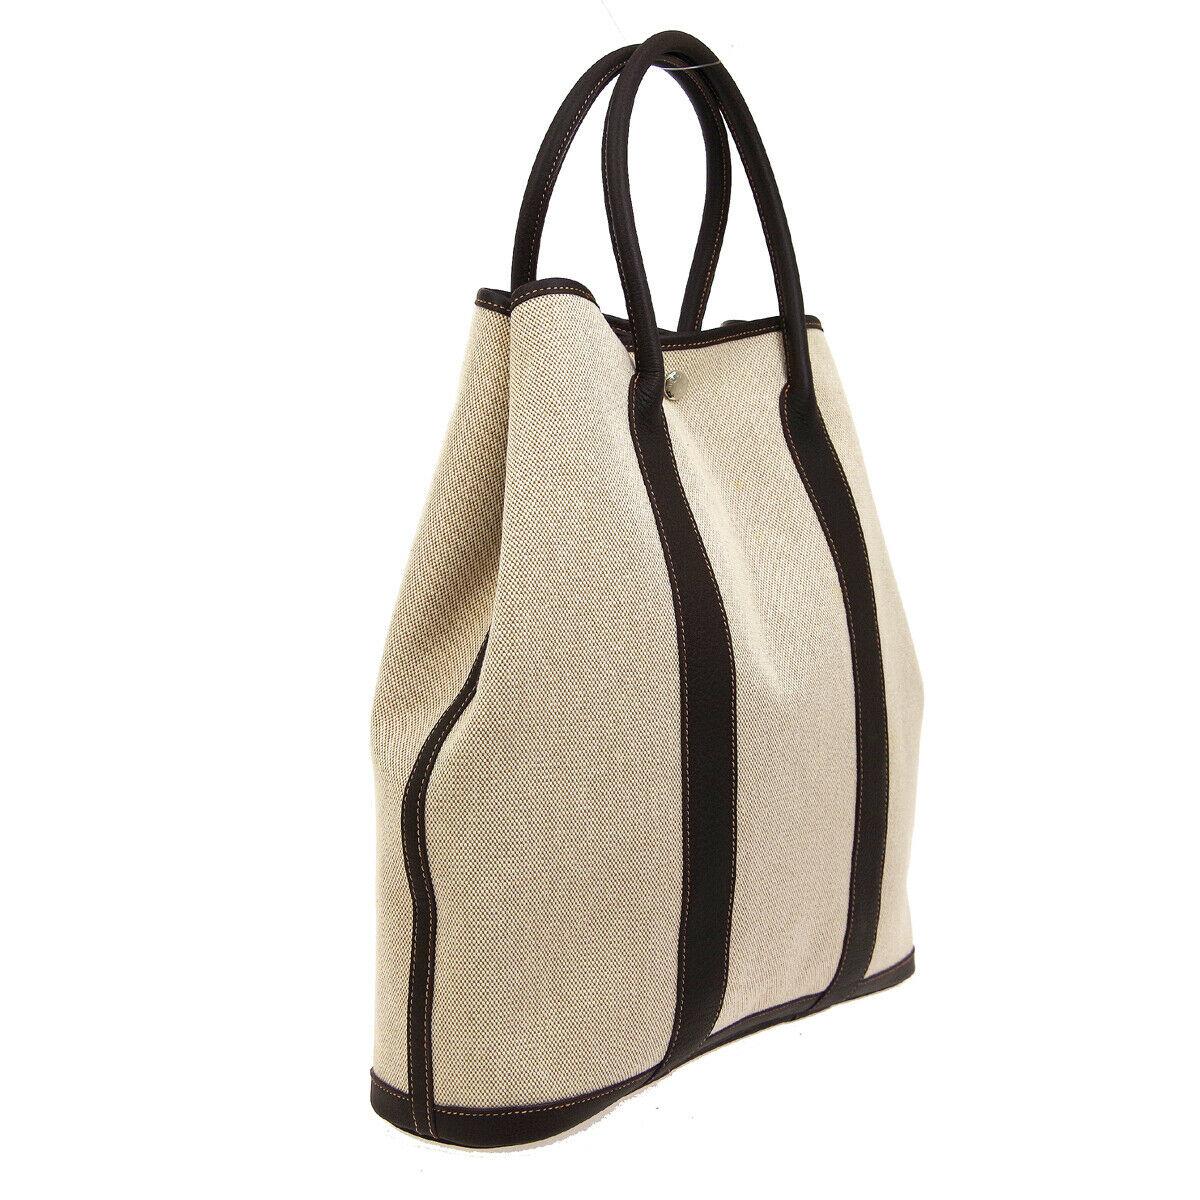 Beige Hermes Tan Canvas Brown Leather Top Handle Carryall Travel Tote Bag